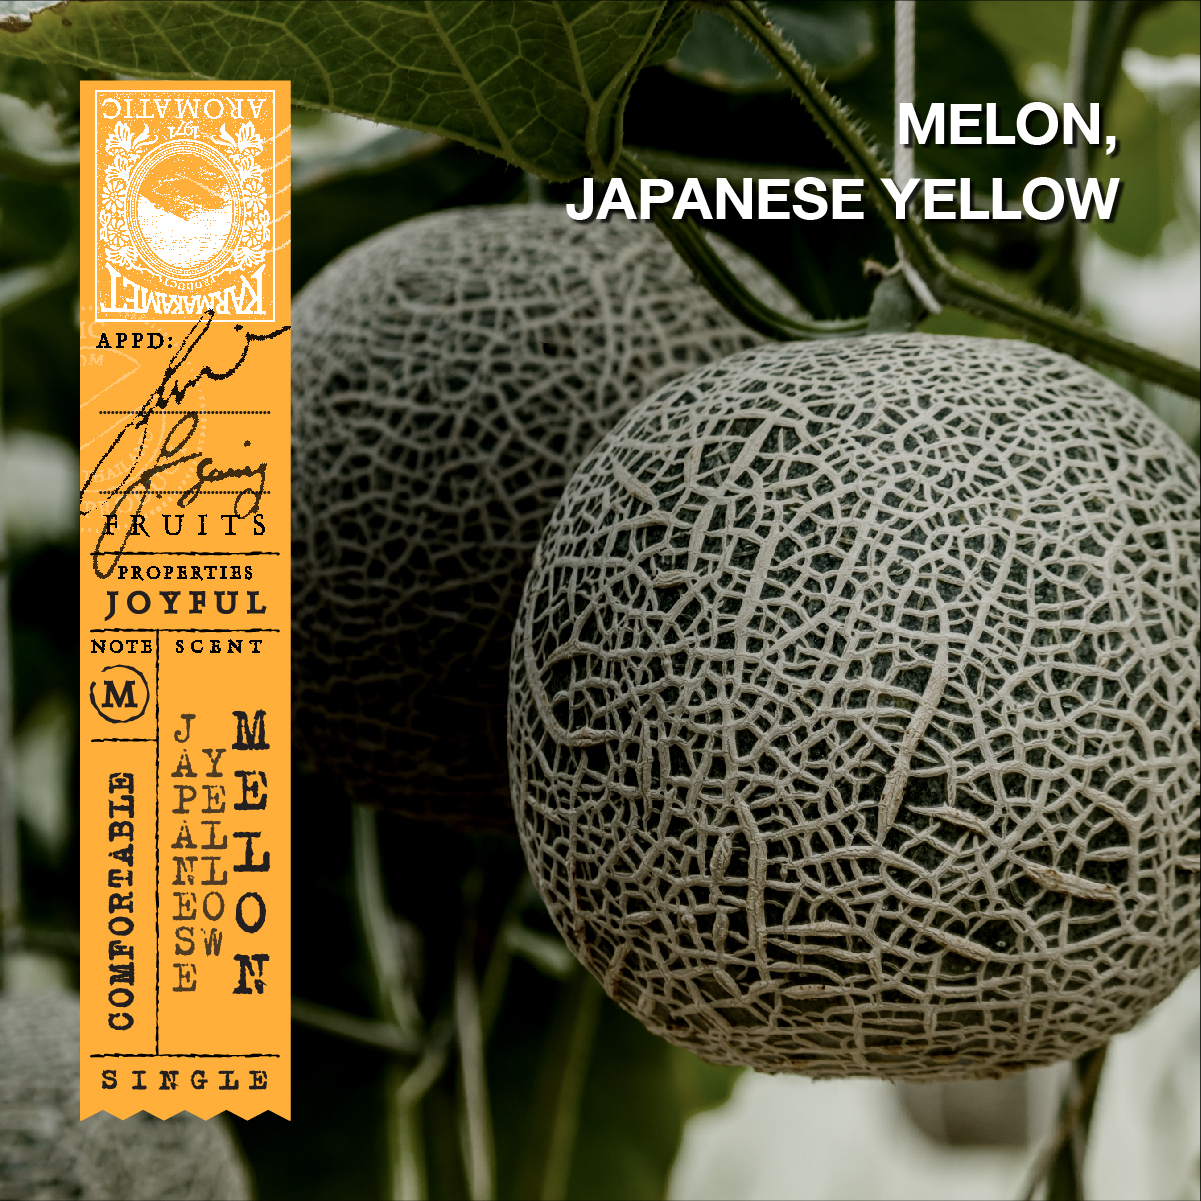 KARMAKAMET Original Room Perfume Diffuser / Single คามาคาเมต ก้านไม้หอมกระจายกลิ่น น้ำหอมบ้าน ก้านไม้หอม น้ำหอมปรับอากาศ บ้านหอม  กลิ่น Japanese Yellow Melonปริมาณ (มล.) 200